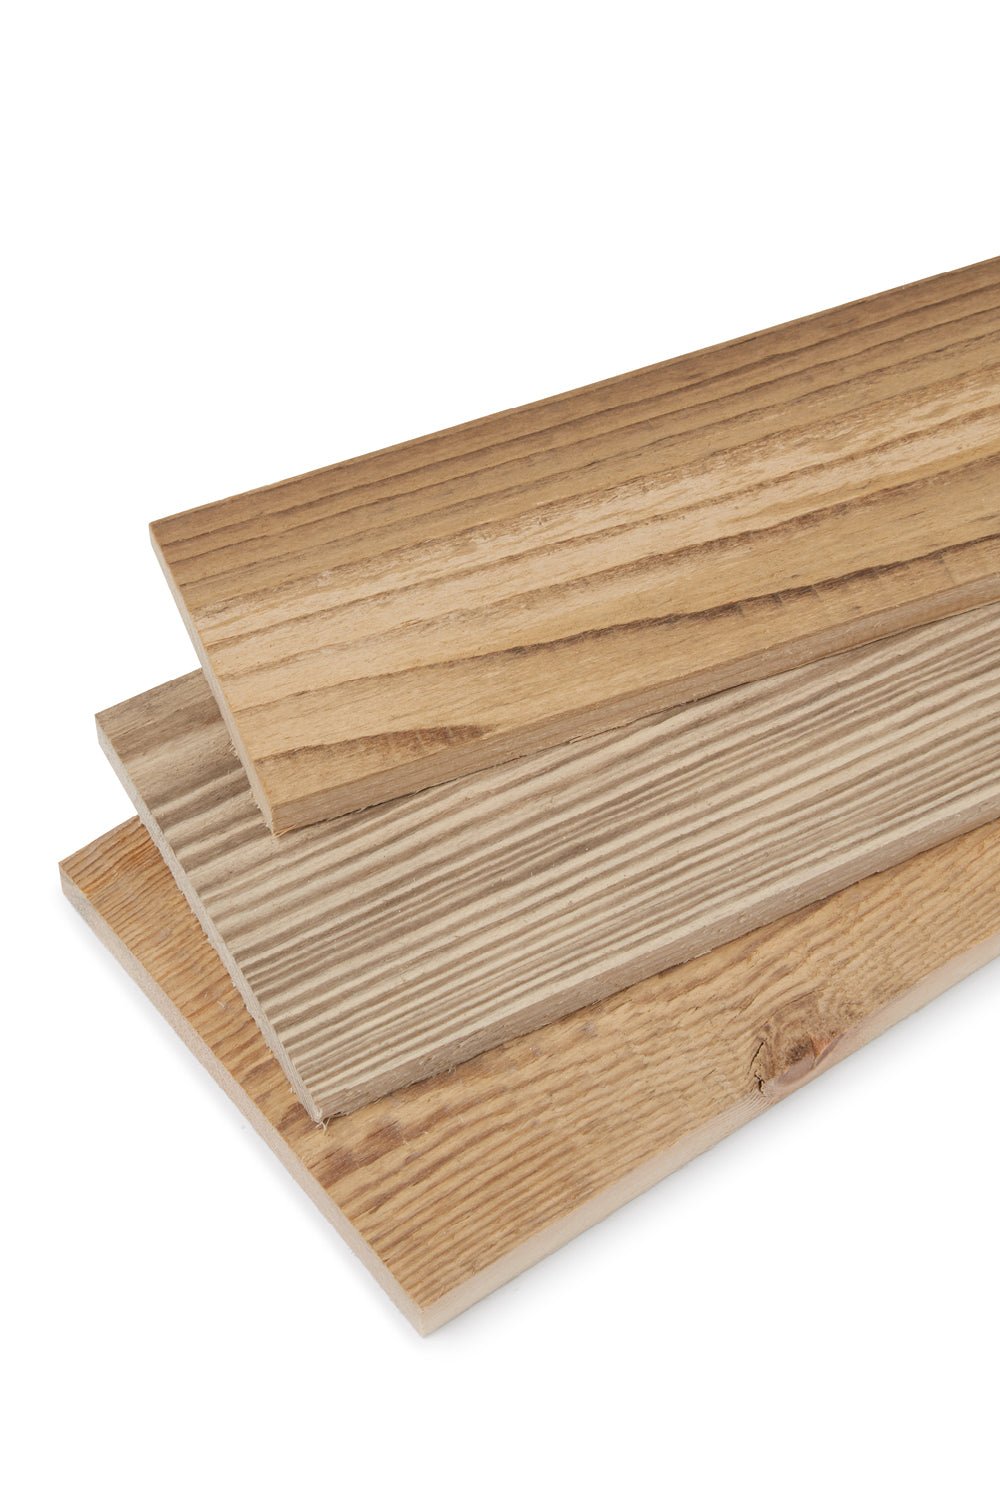 Reclaimed Natural Pine Planks